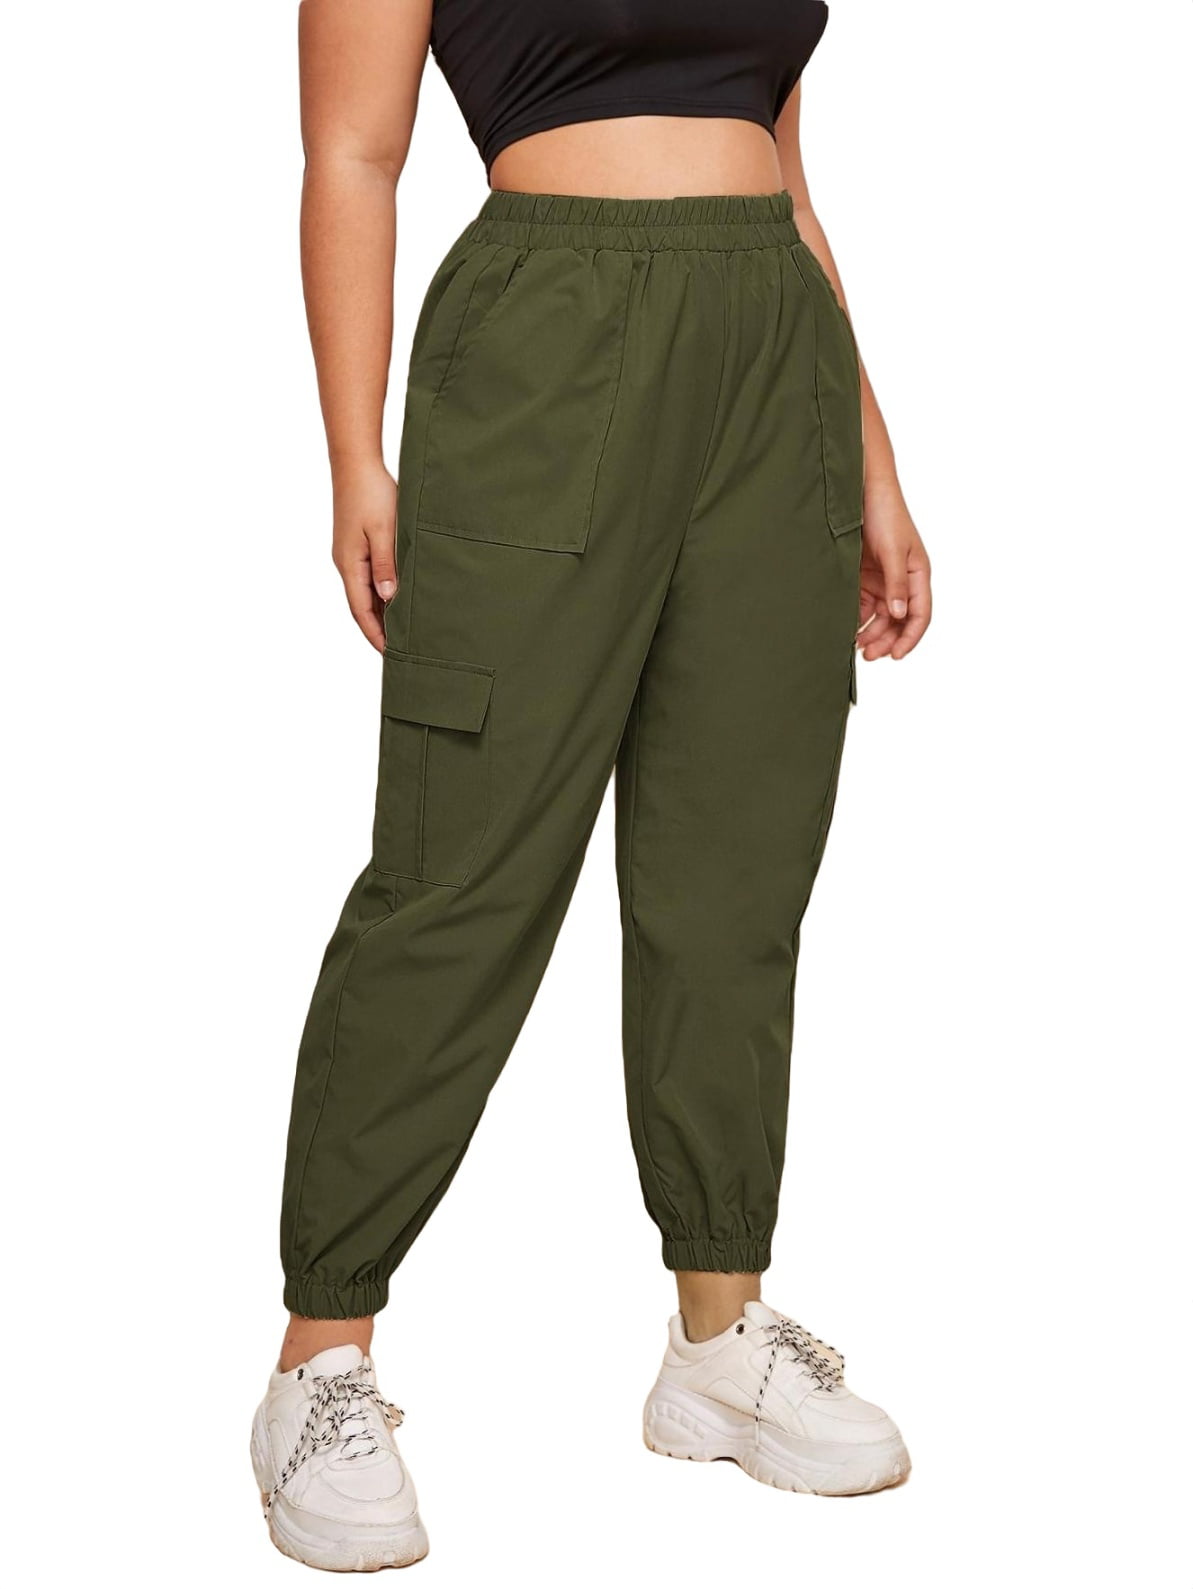 Womens Plus Pants Casual Plain High Waist Pocket Army Green 3XL Walmart.com